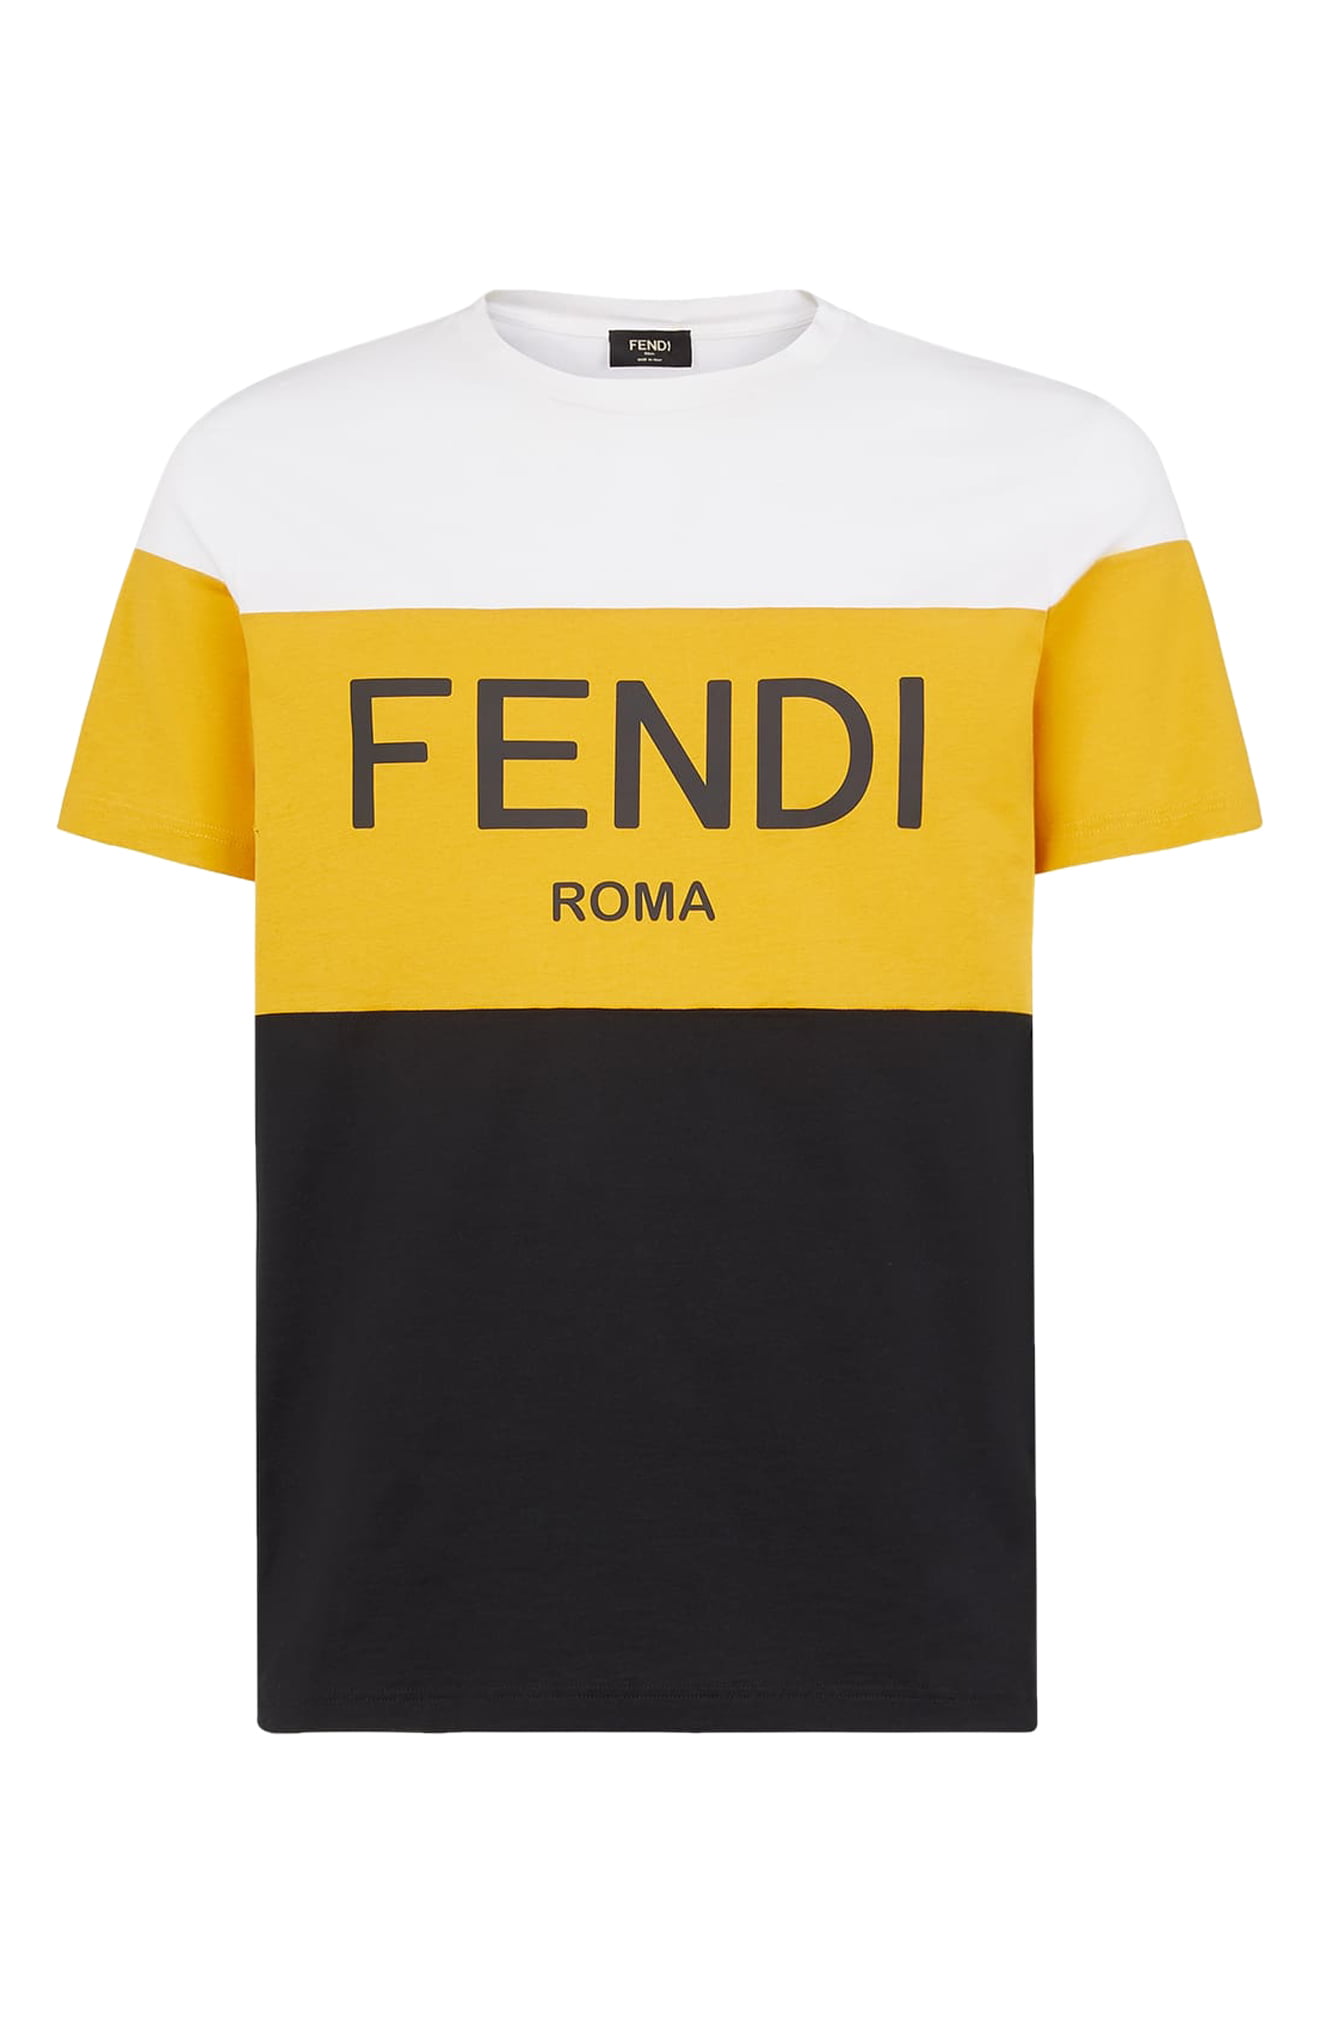 black and yellow fendi shirt